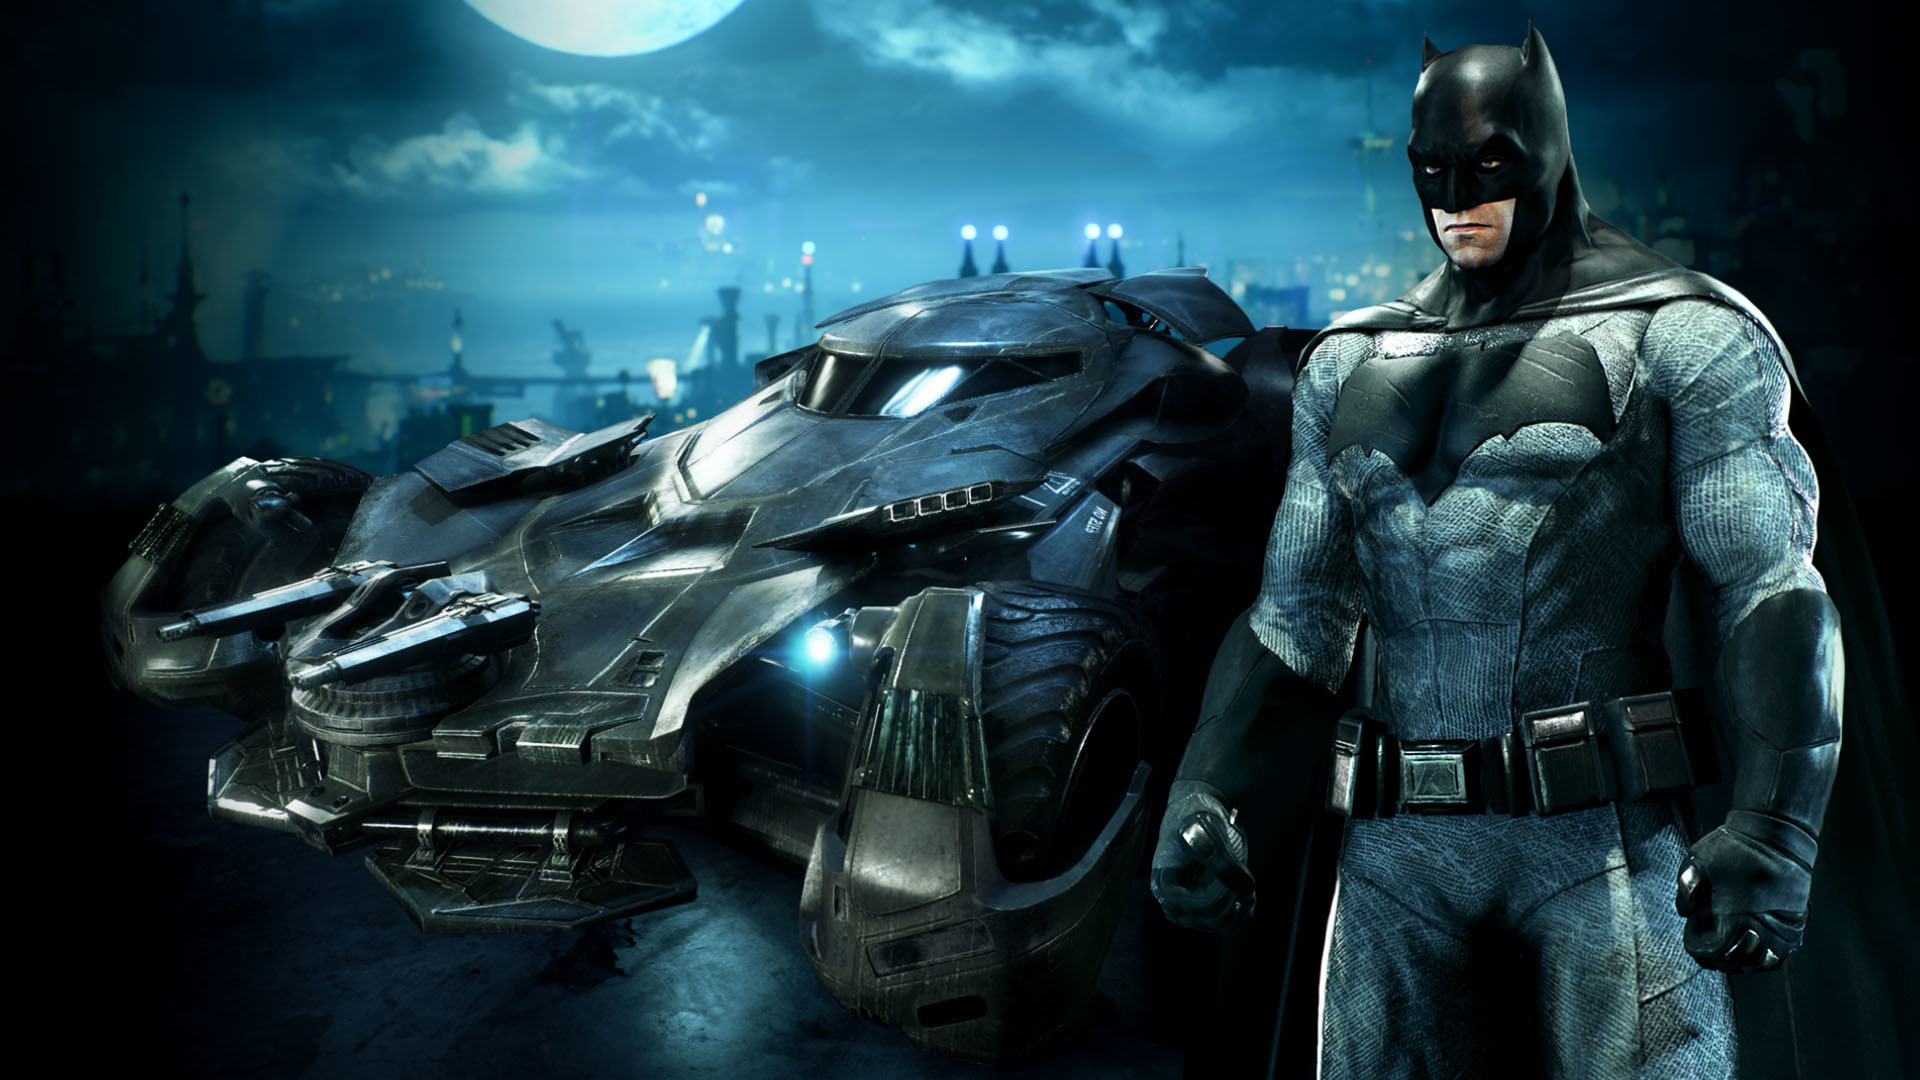 Batman v Superman Batmobile Pack. “